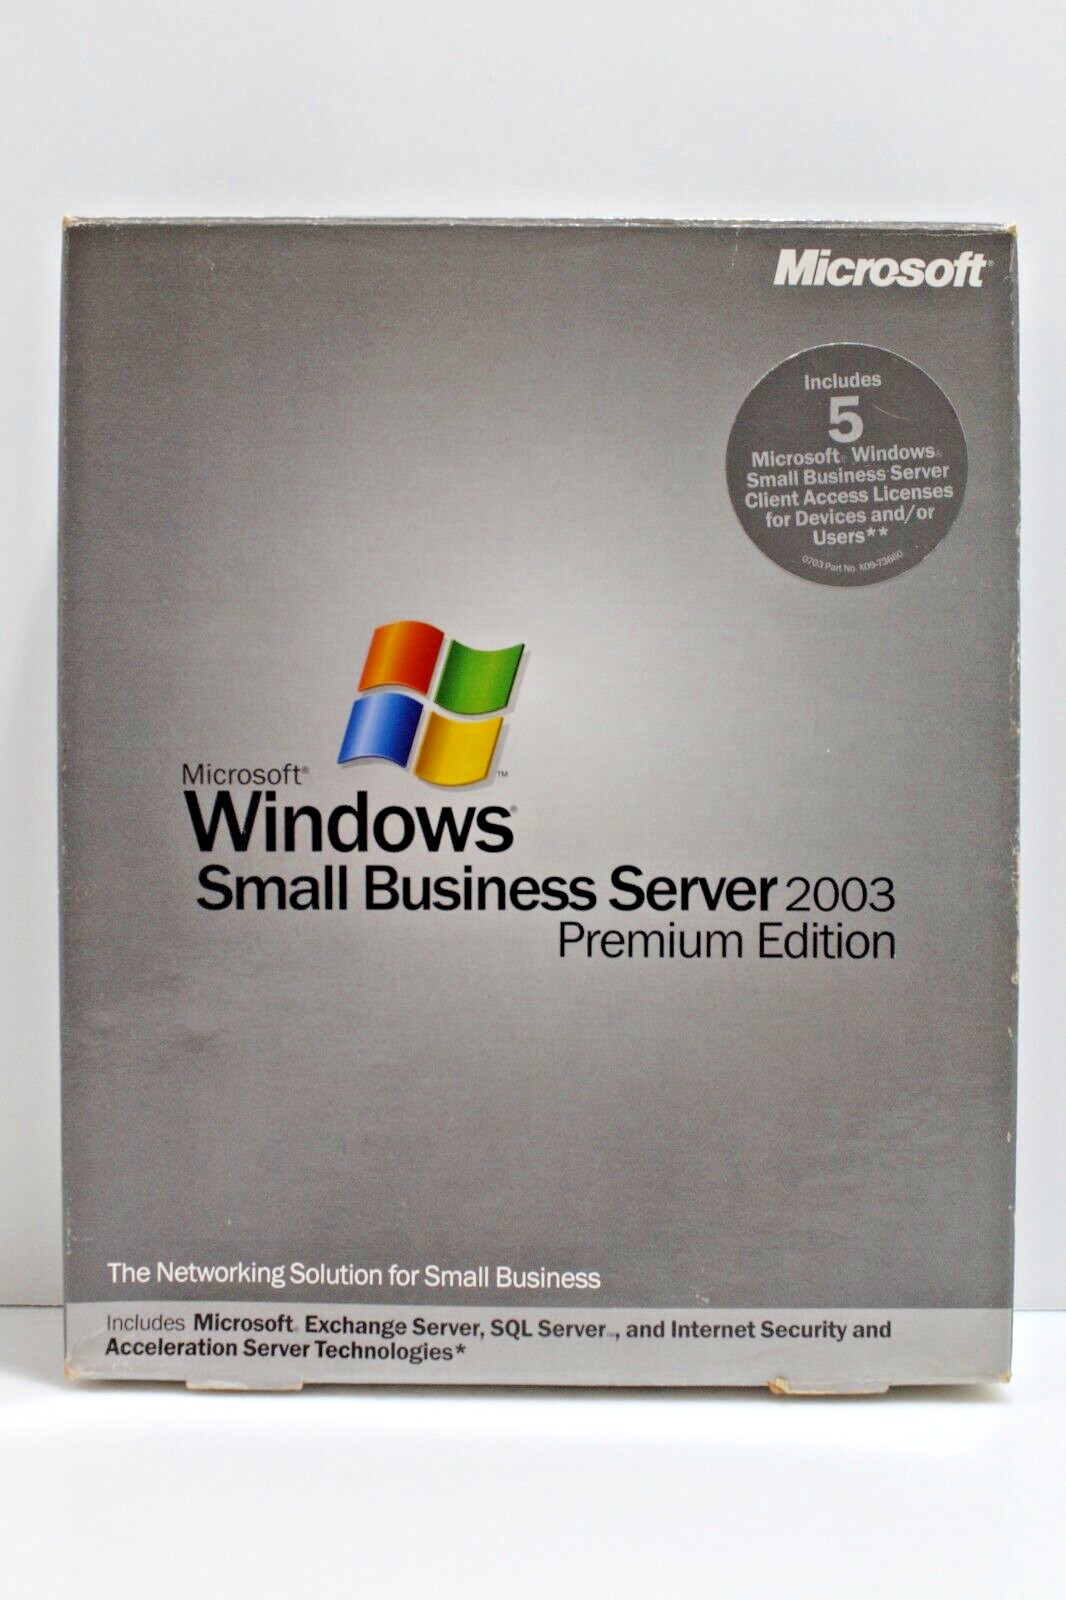 Microsoft Windows Small Business Server 2003 Premium Edition - Missing license